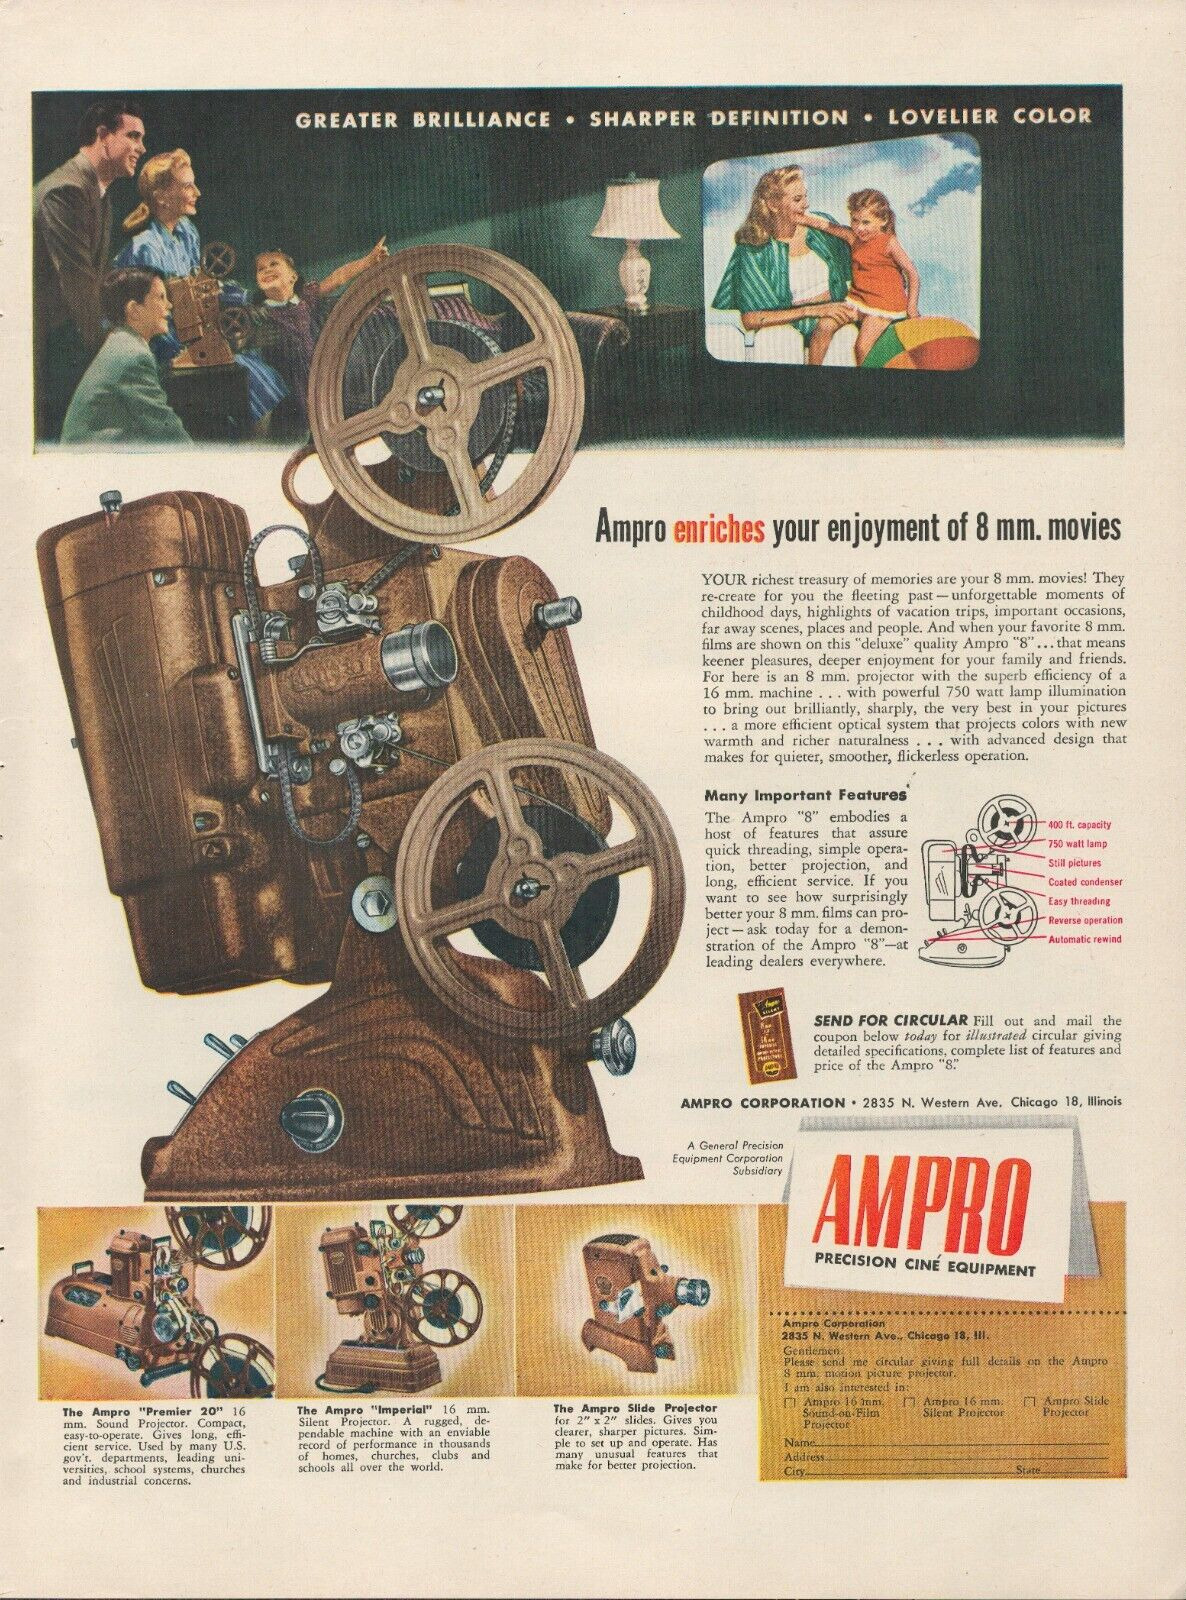 1947 Ampro Precision Equipment Enjoyment 8 mm Movie Projector Vintage Print Ad